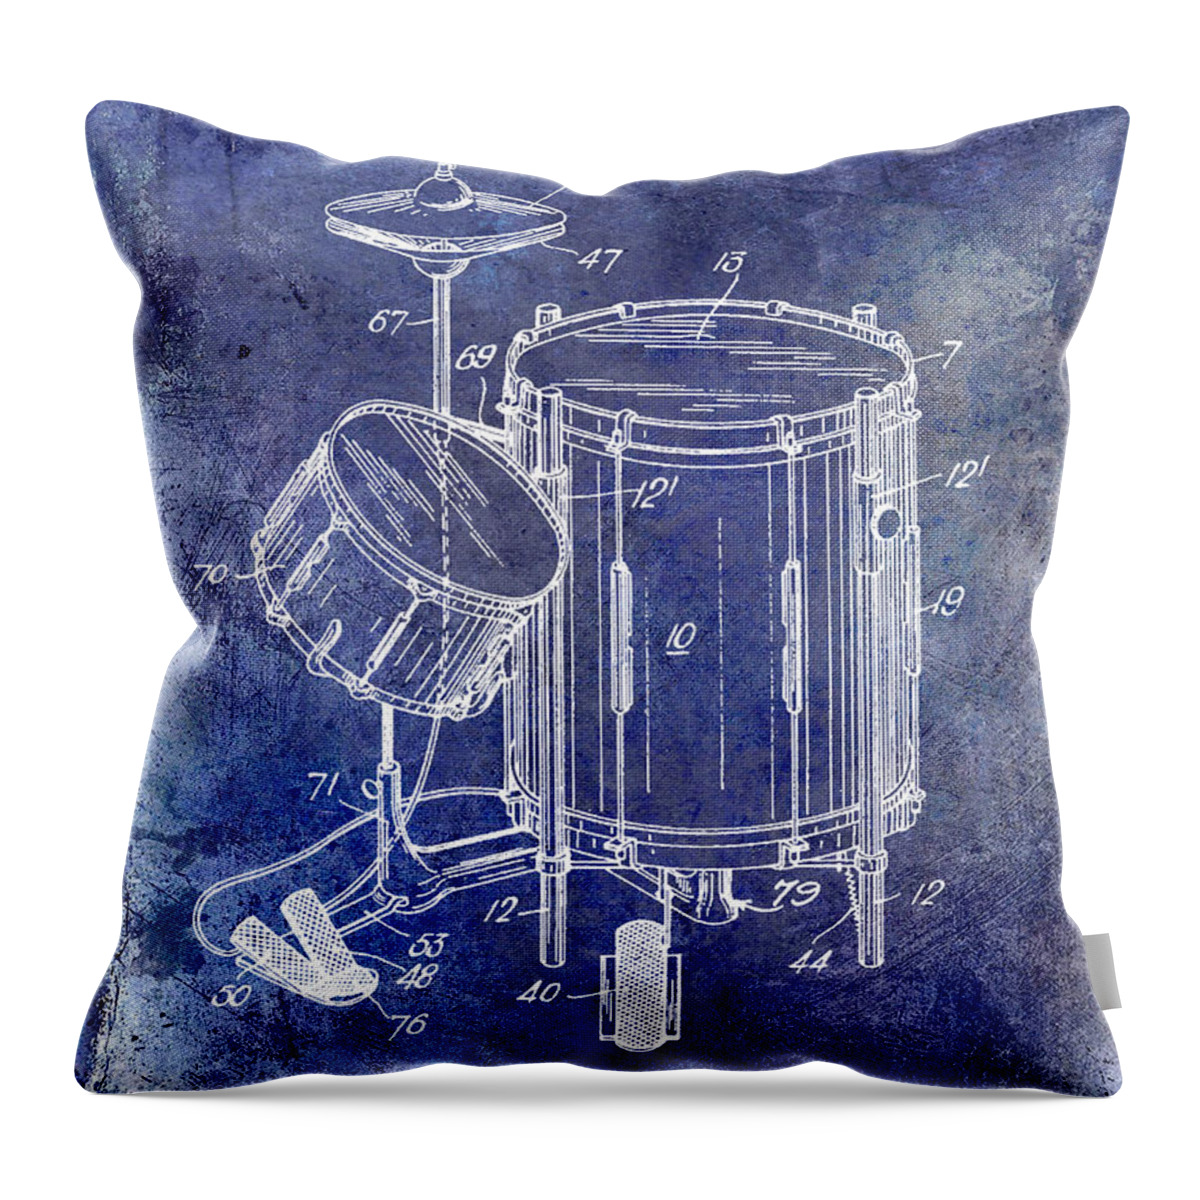 Drum Throw Pillow featuring the photograph 1951 Drum Kit Patent Blue by Jon Neidert